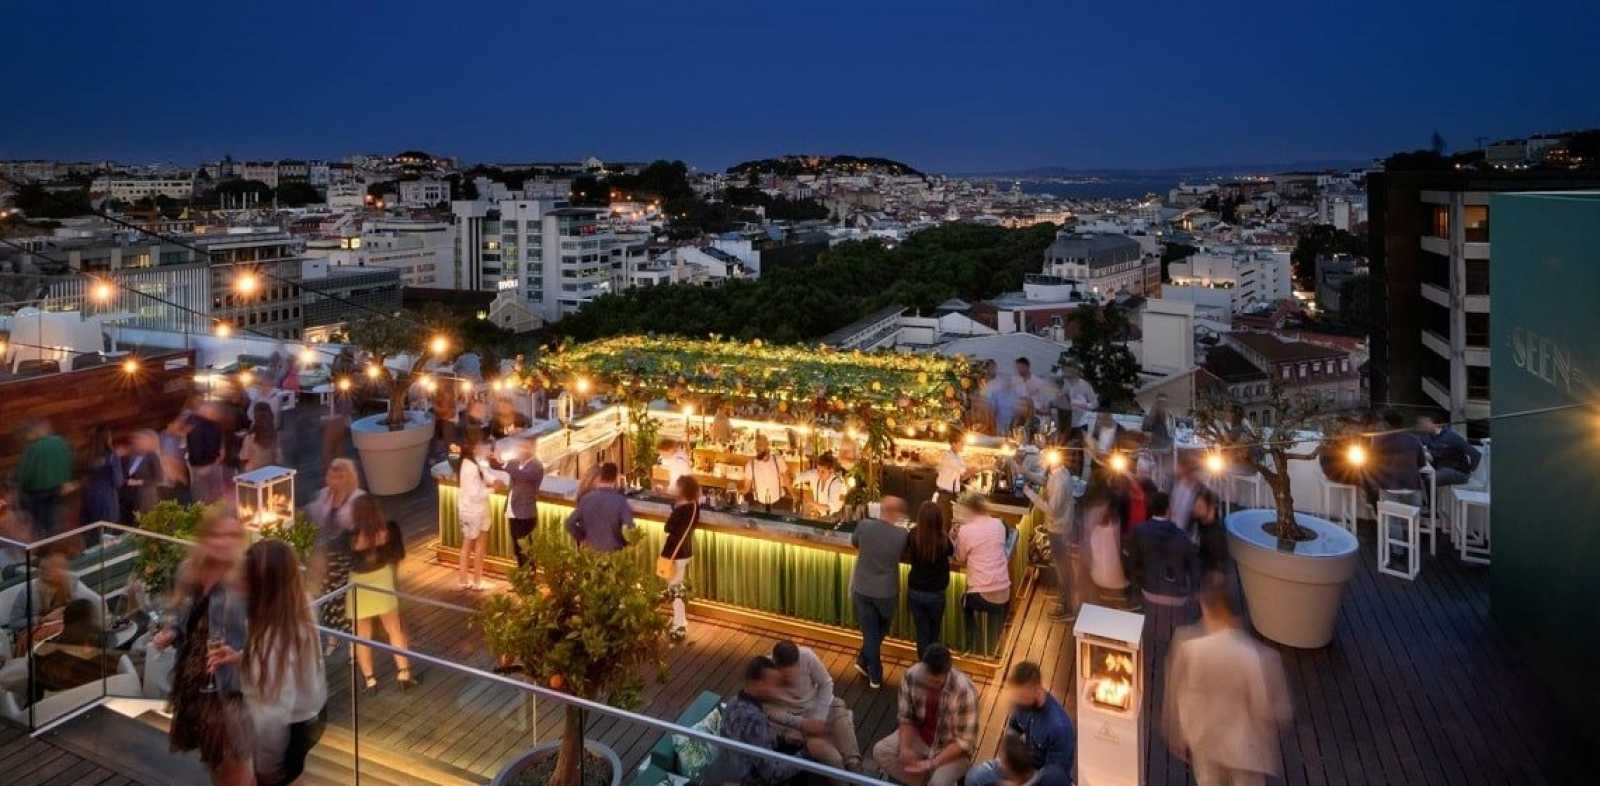 Rooftop Sky Bar by Seen - Hotel Tivoli in Lisbon - 3